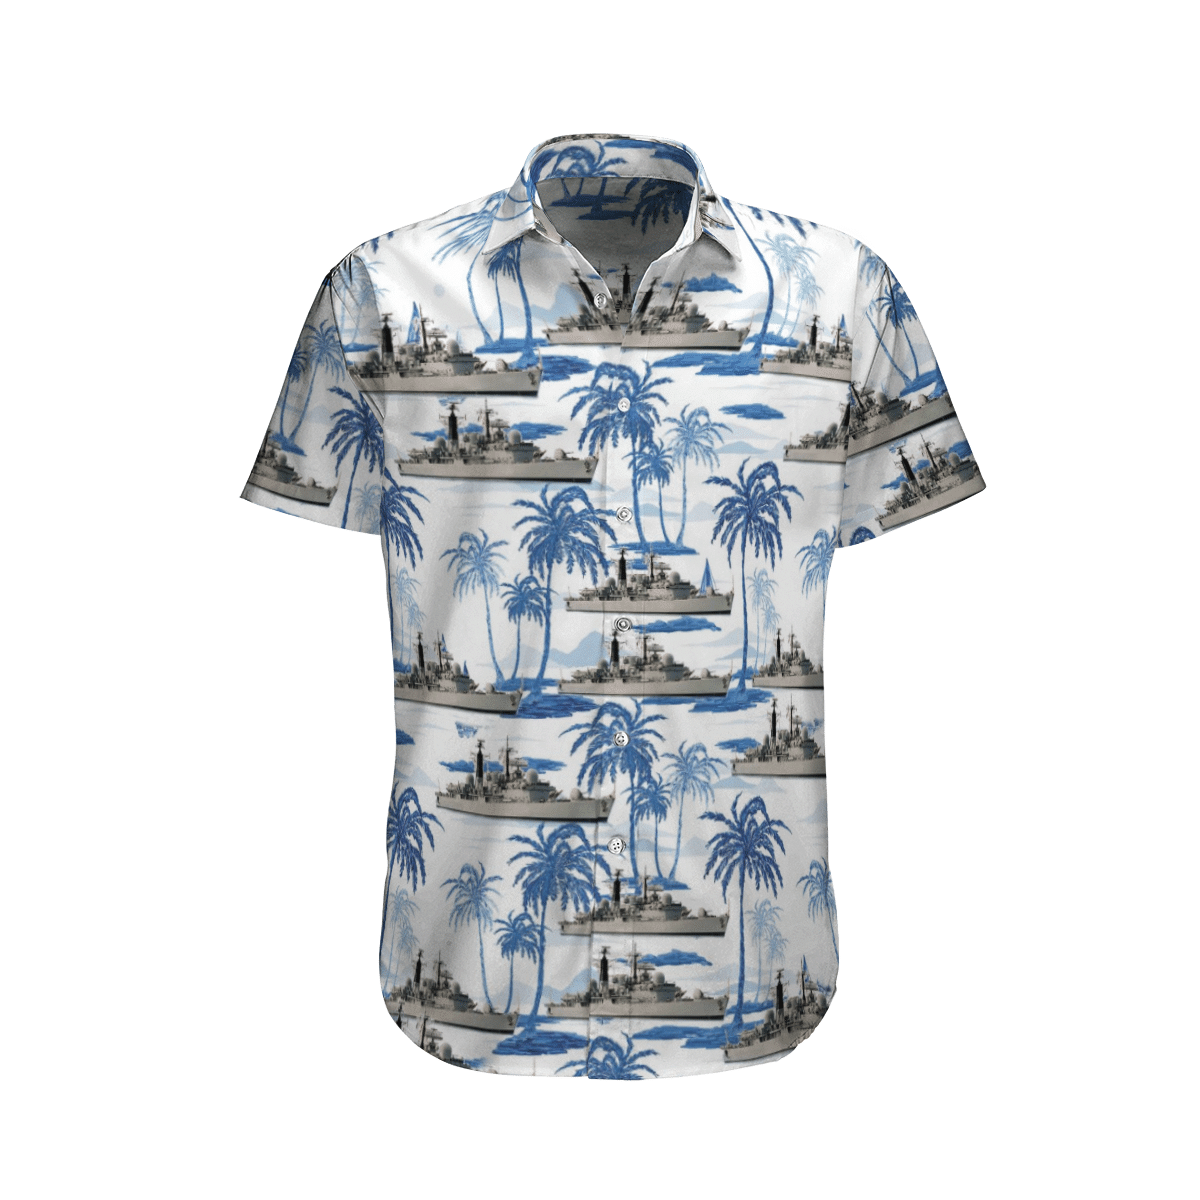 Enjoy your summer with top cool hawaiian shirt below 68